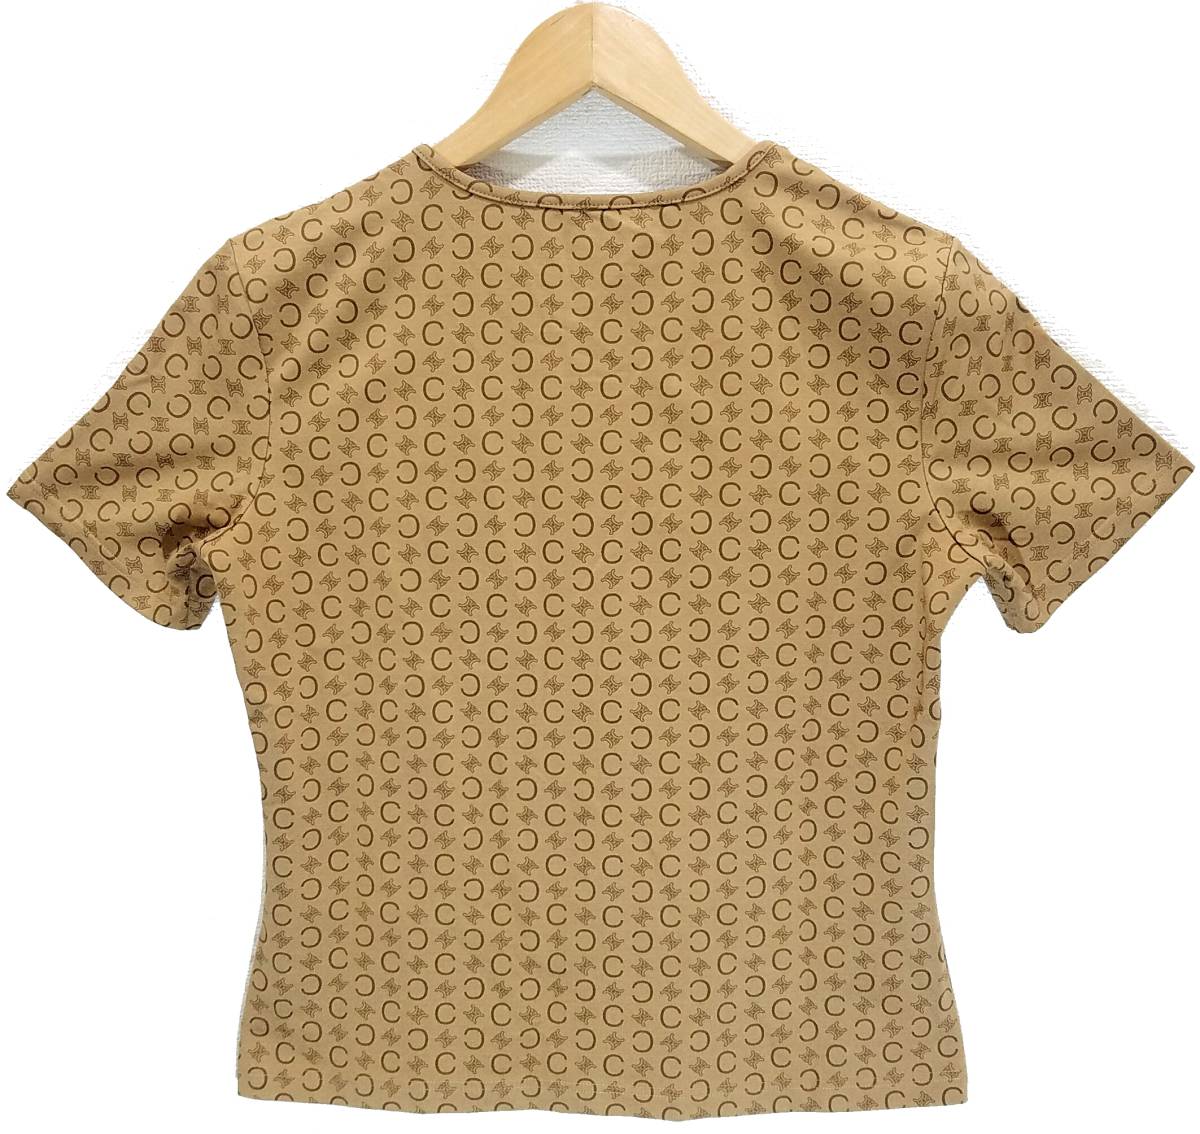  domestic regular goods Celine Japan GOLD Macadam total pattern monogram T-shirt L lady's 42 stretch waist Shape CELINE gold group Brown 